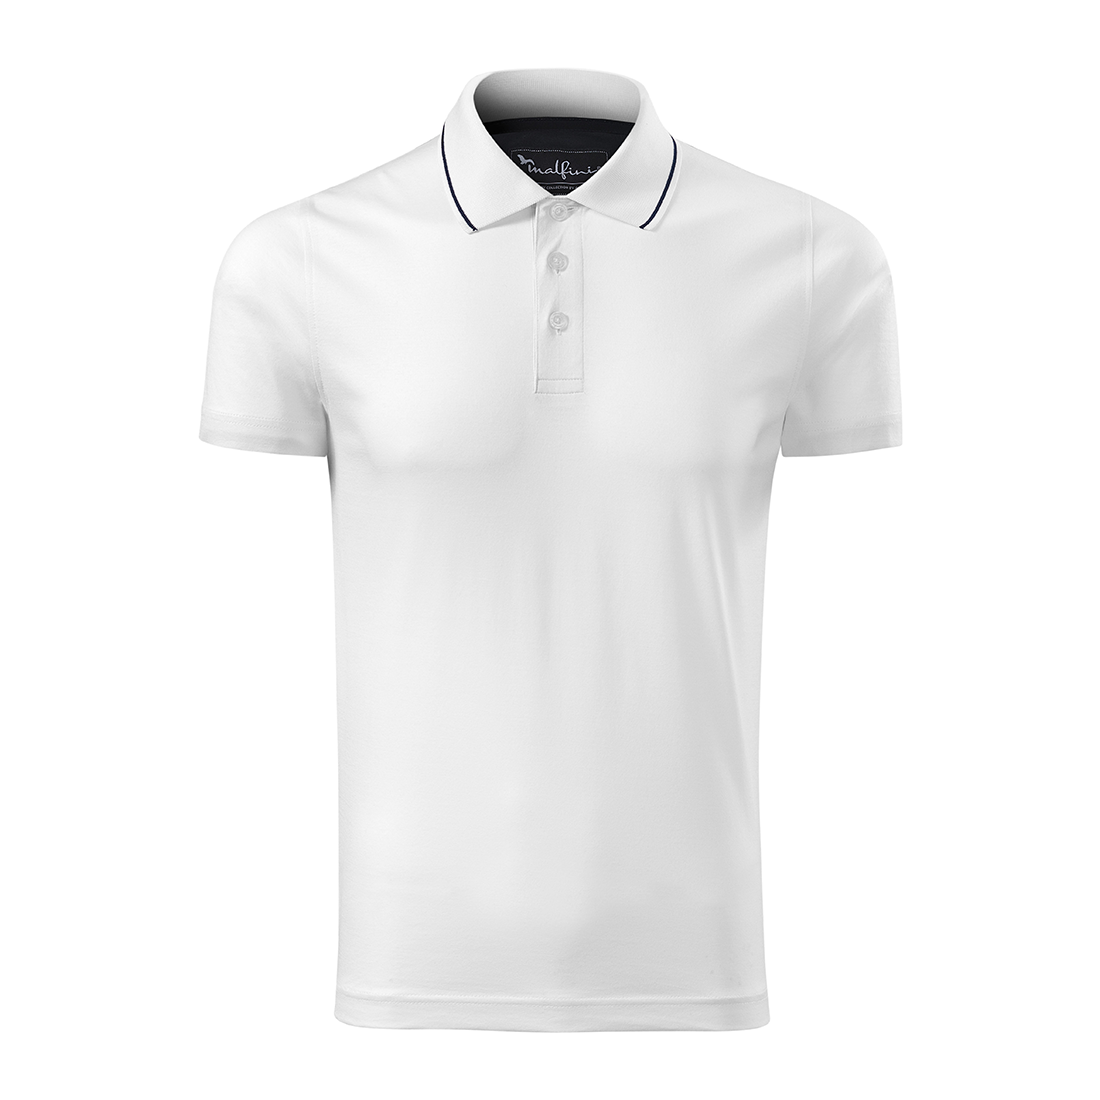 GRAND Men's Polo T-Shirt - Safetywear